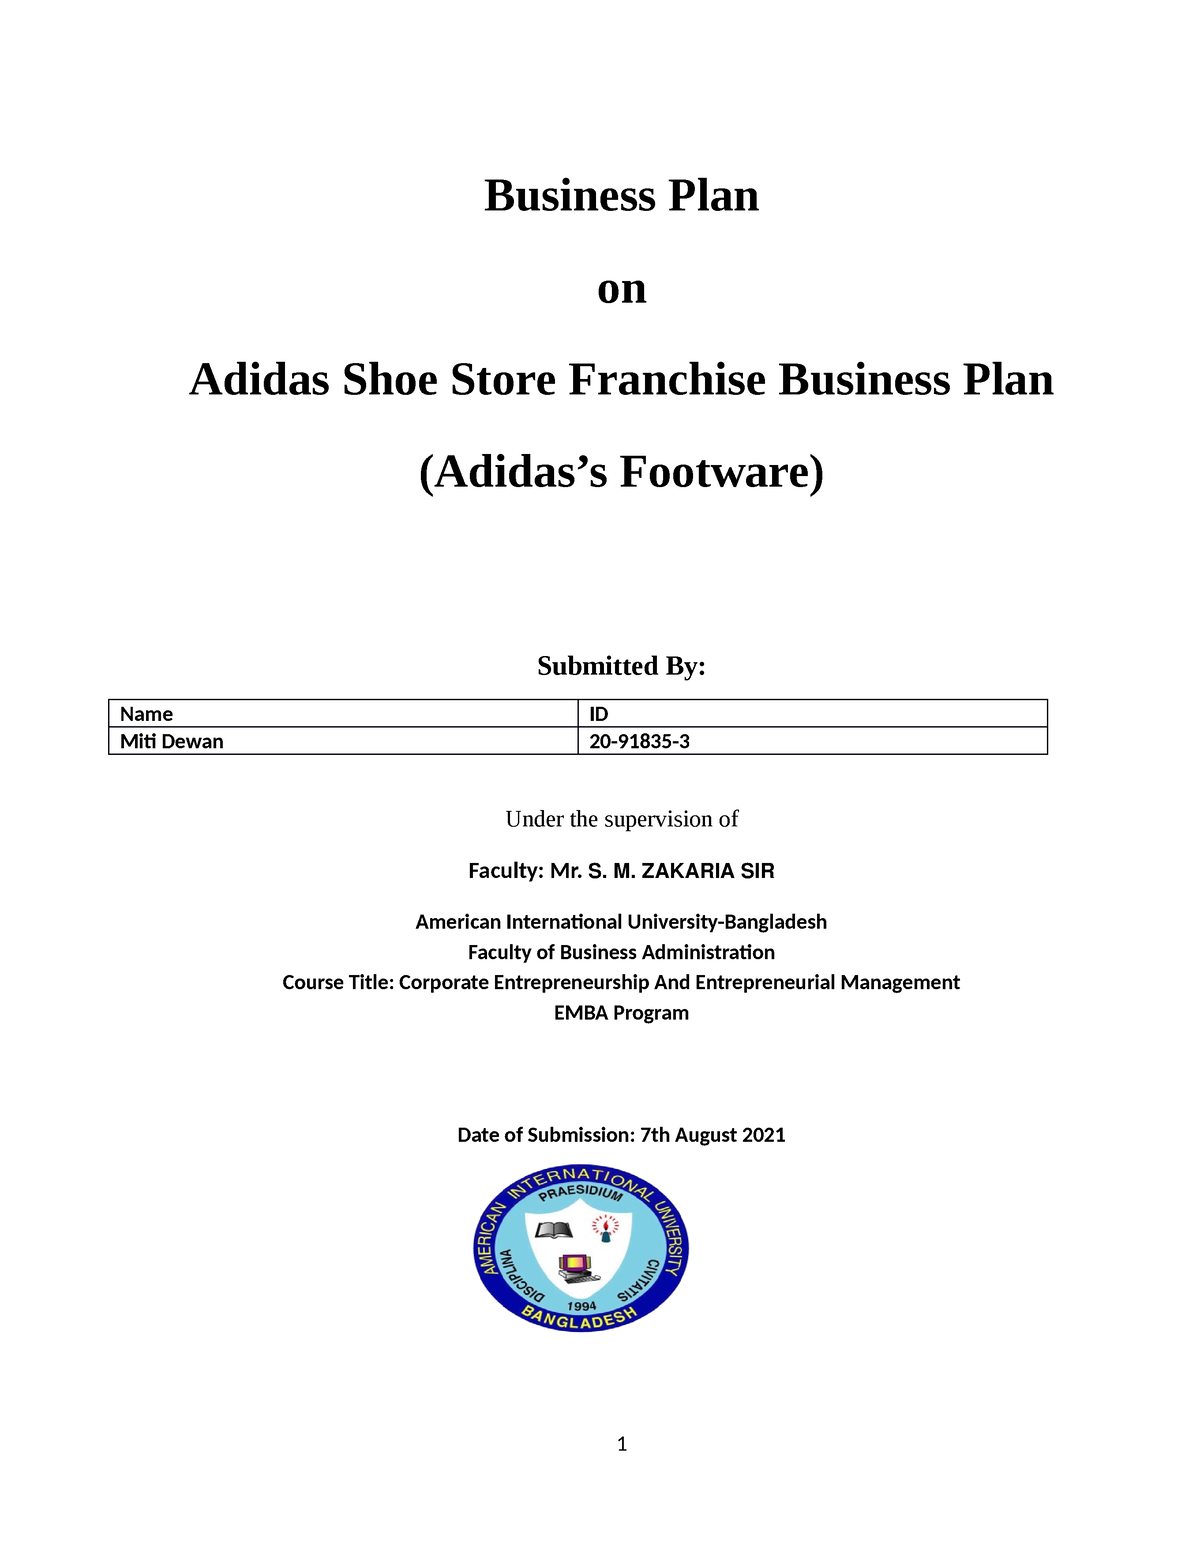 Bigote Exitoso principal Business Plan on Adidas Shoe Store - Business Plan on Adidas Shoe Store  Franchise Business Plan - Studocu